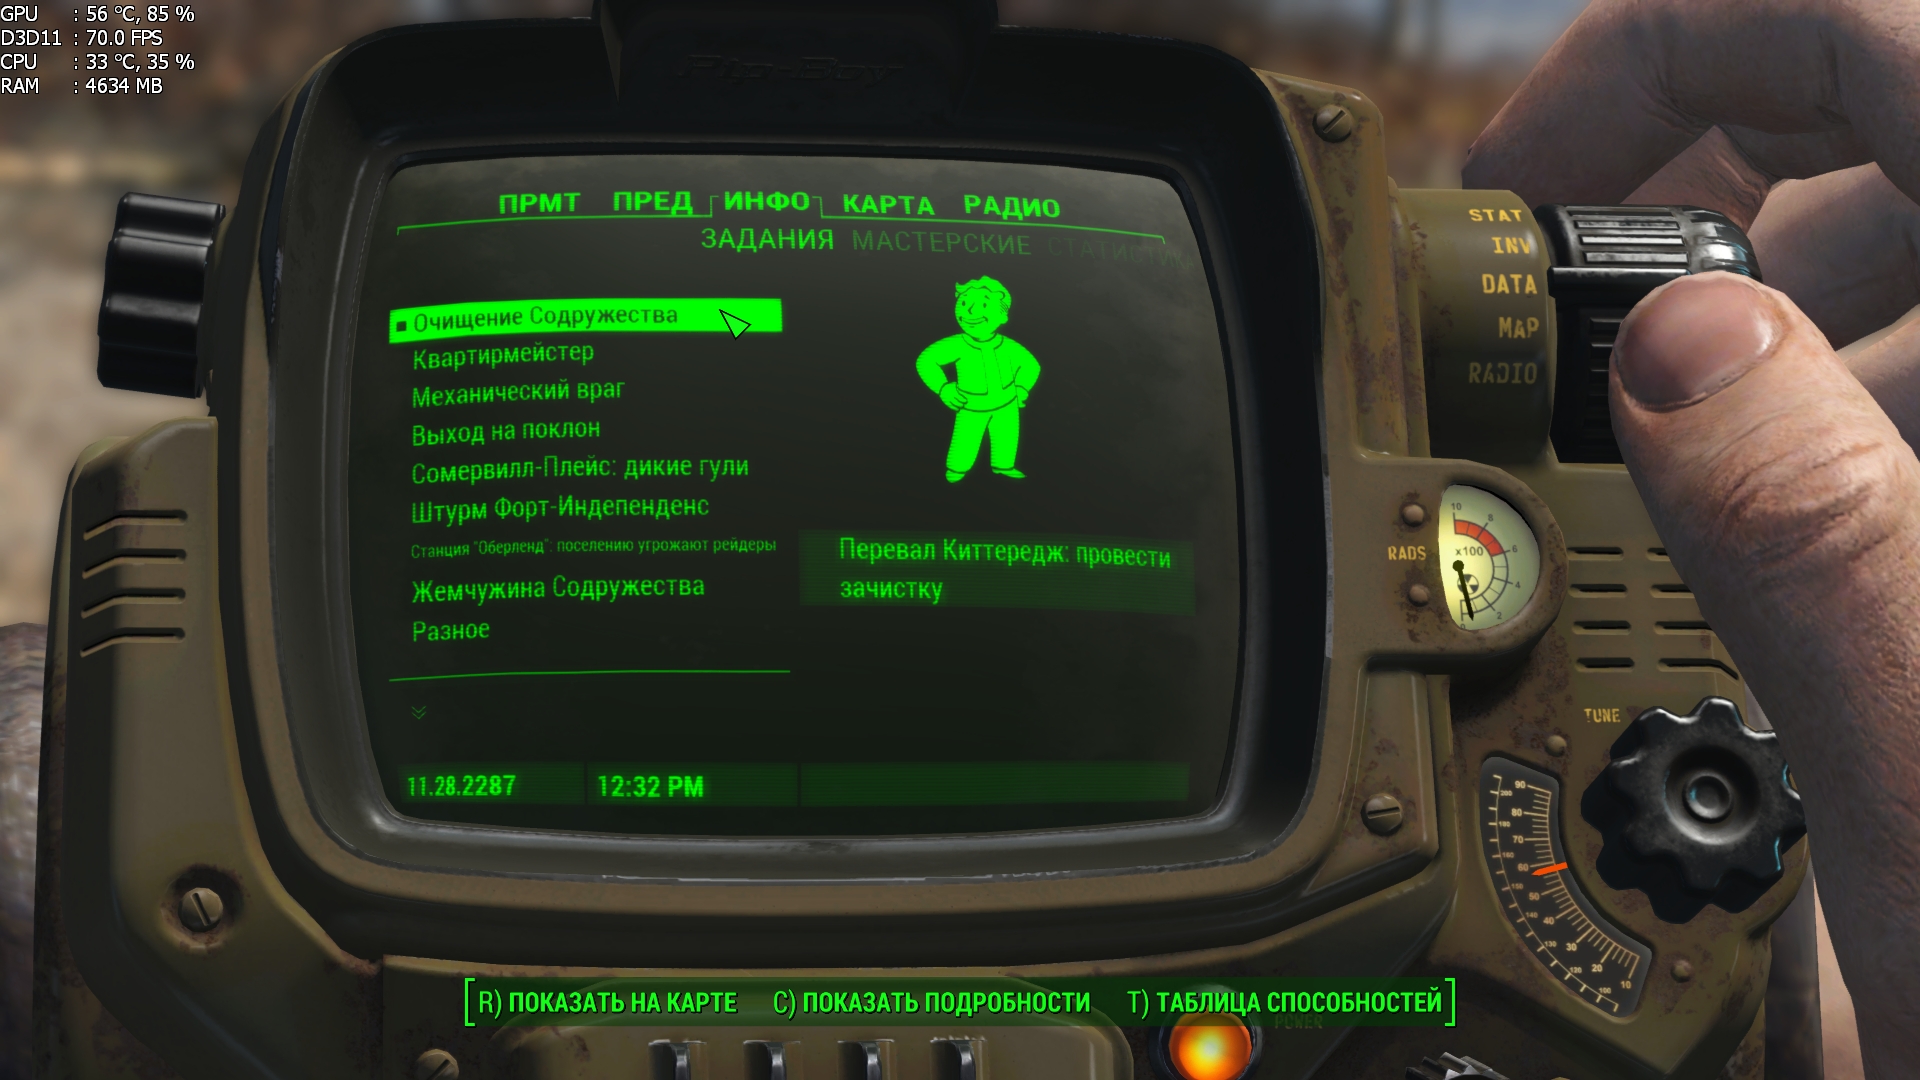 Fallout 4 перевал киттеридж провести зачистку как пройти фото 5